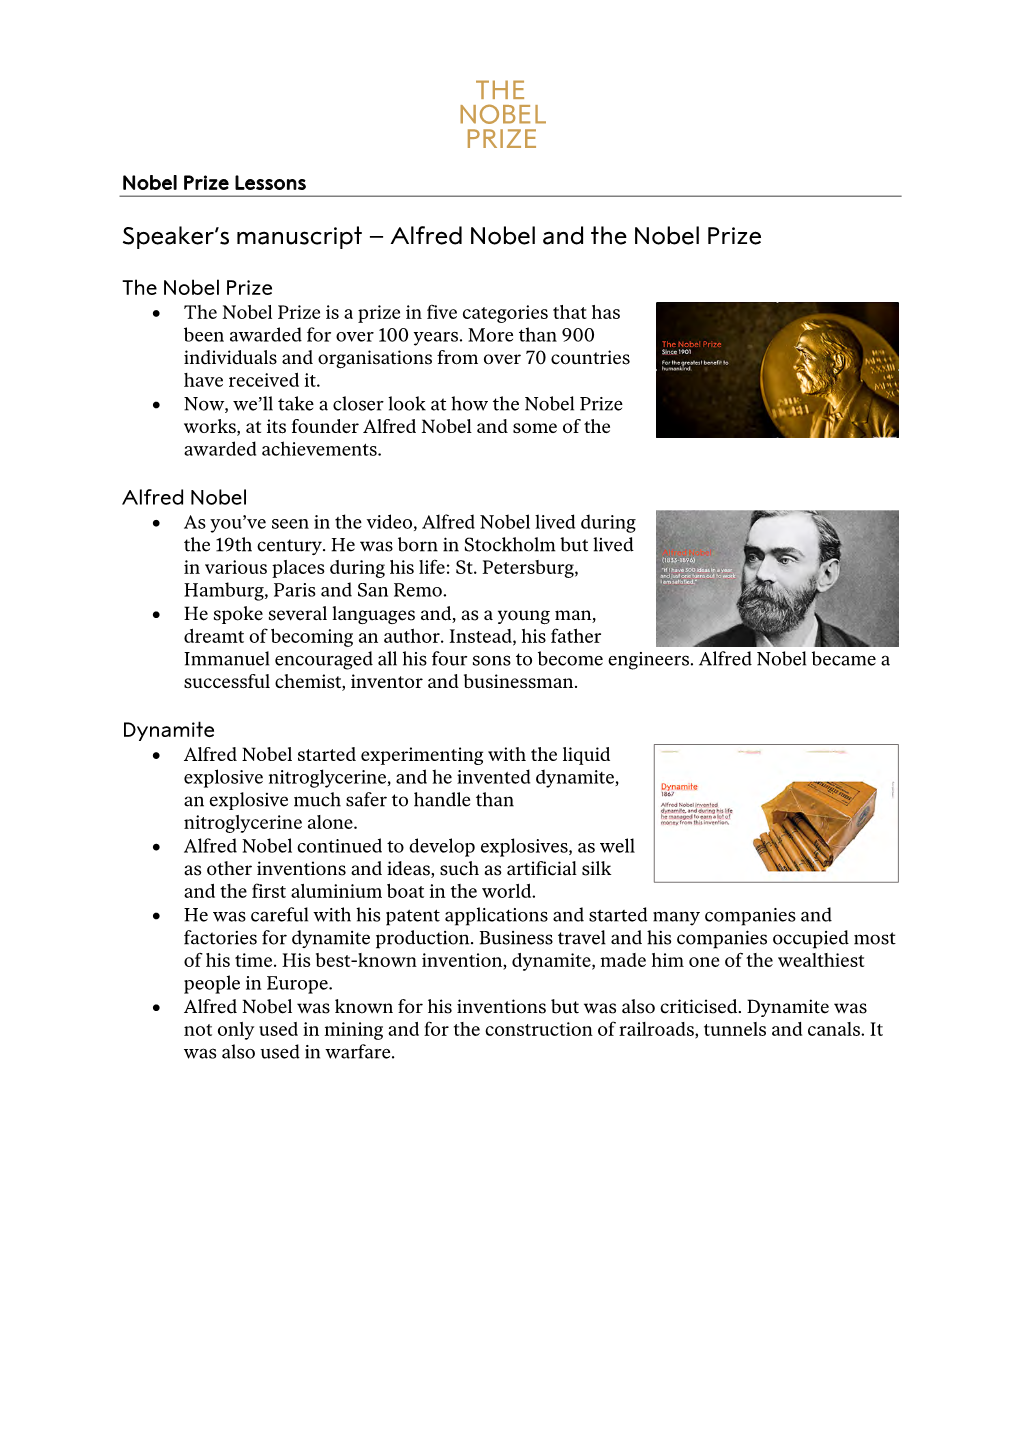 Speaker's Manuscript – Alfred Nobel and the Nobel Prize